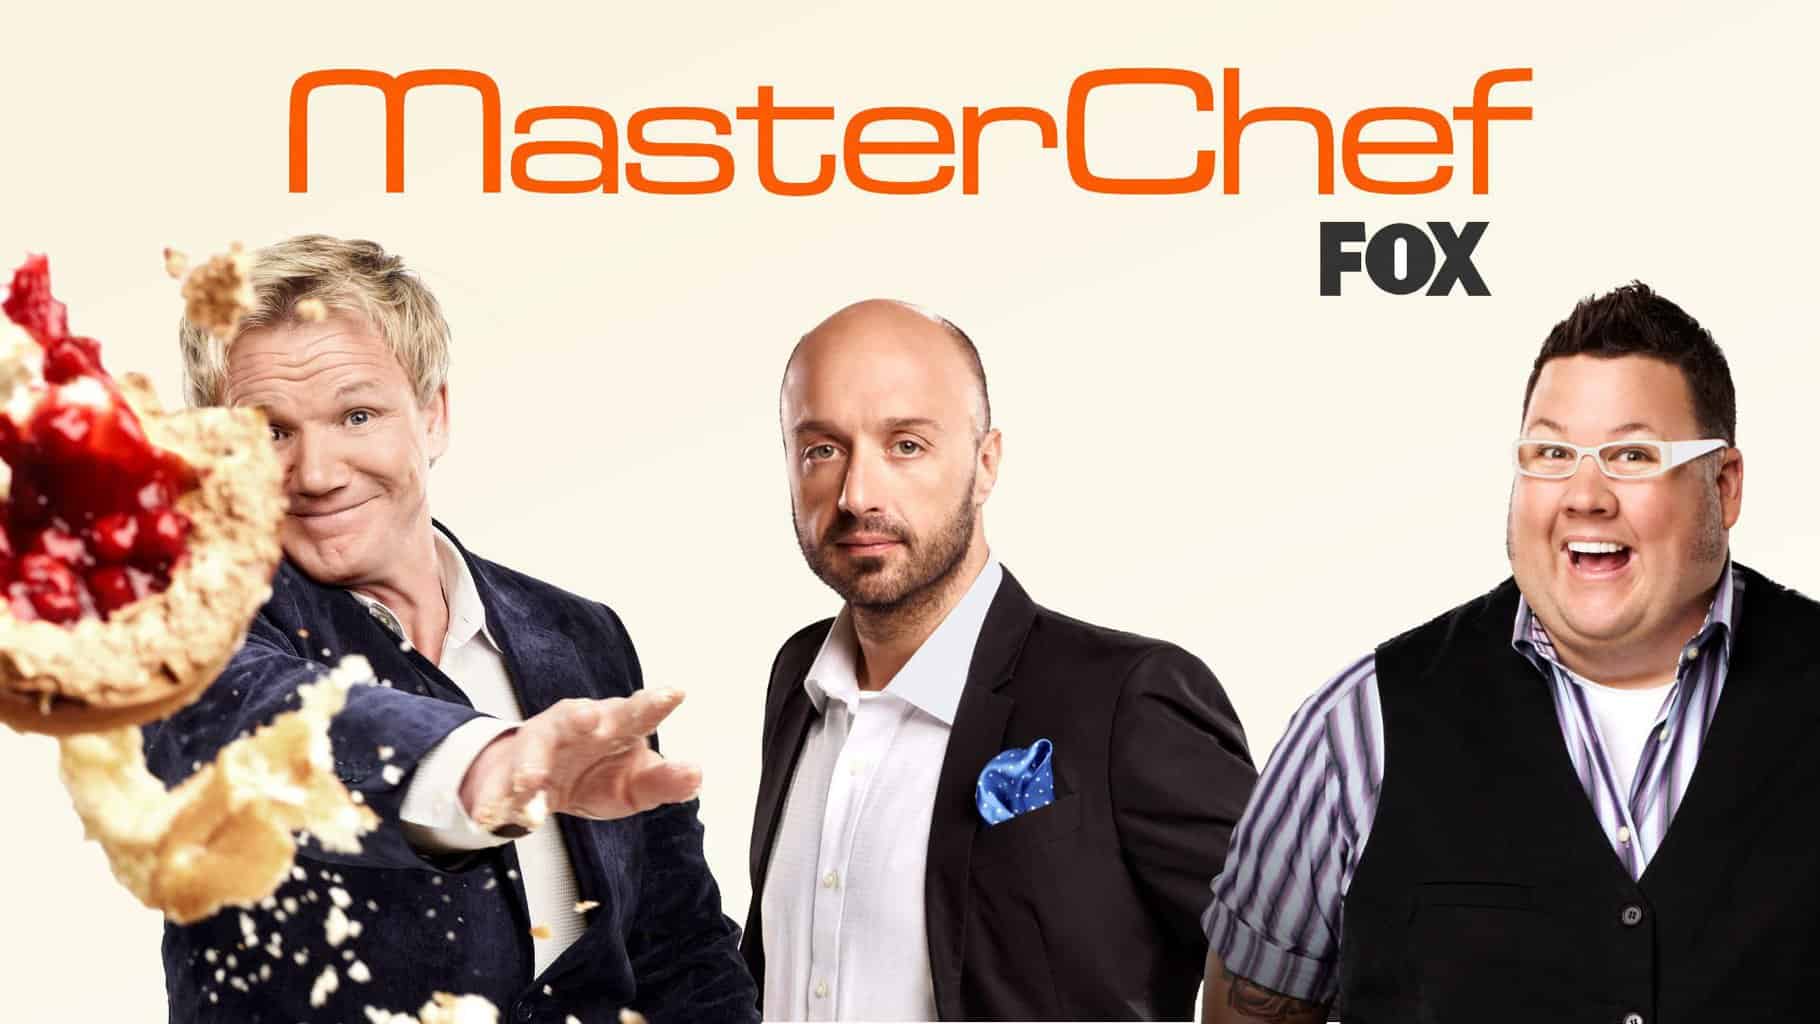 "MasterChef" on Fox